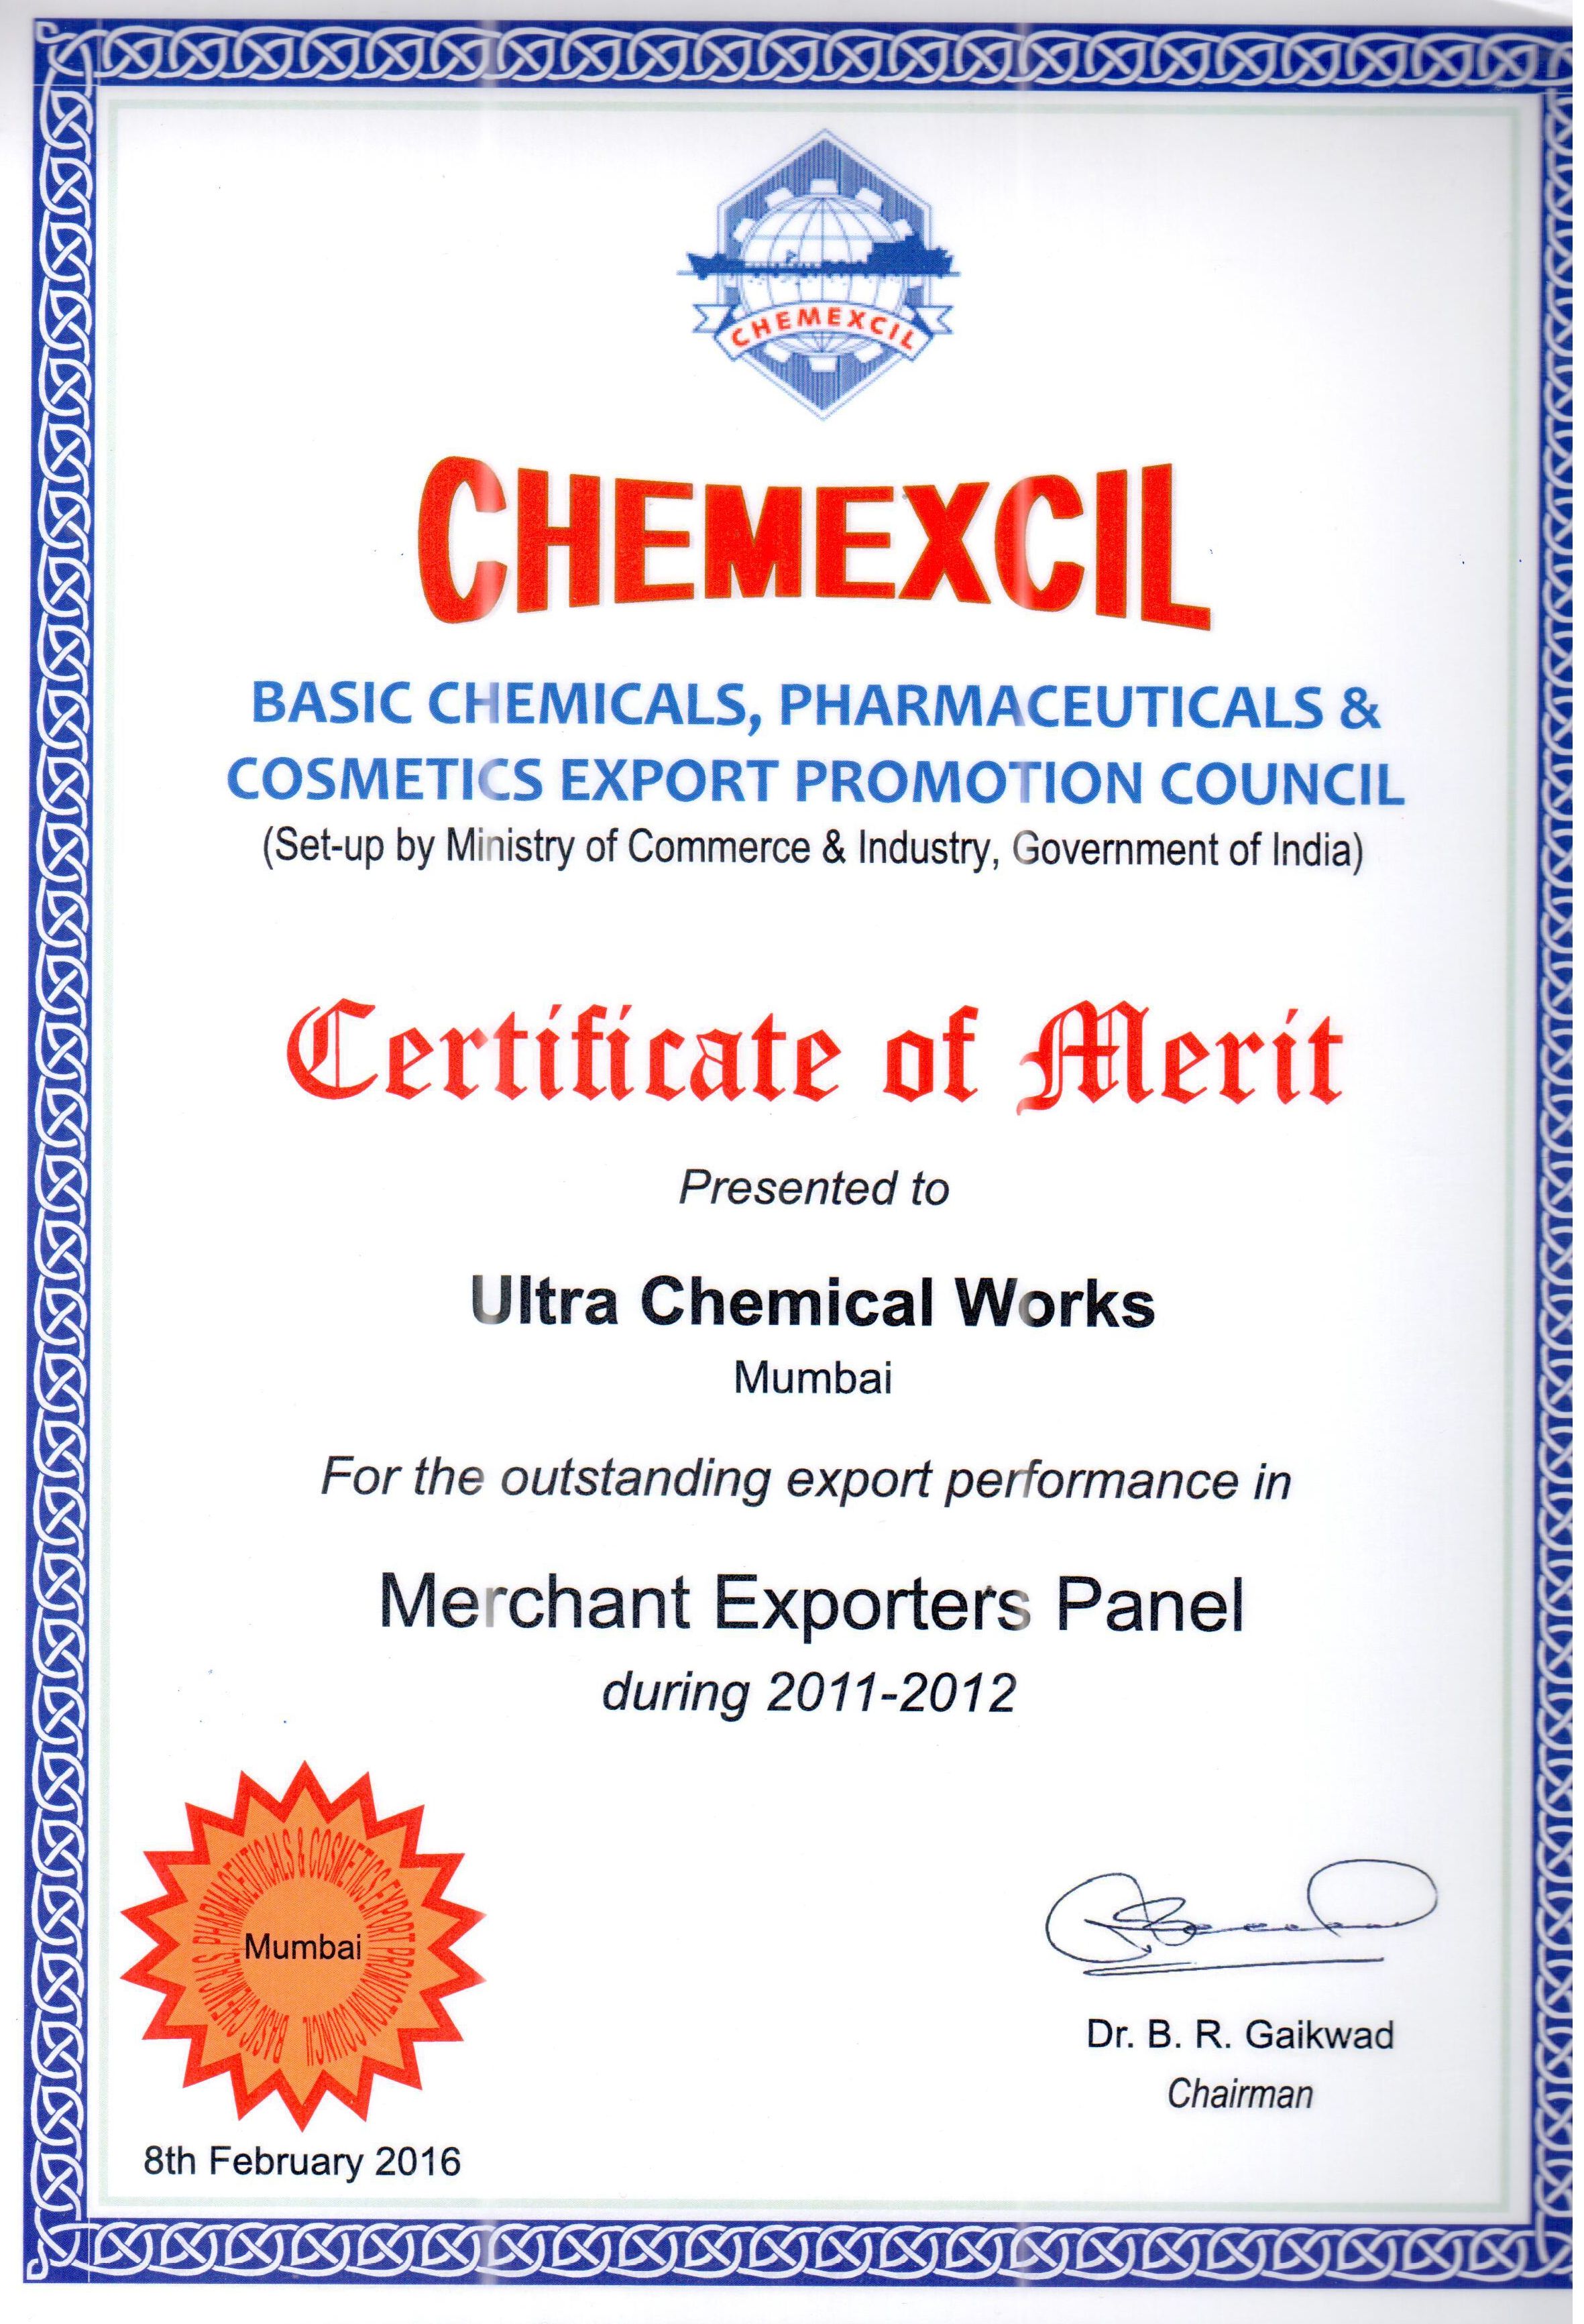 Chemexcil Award for 2011-2012